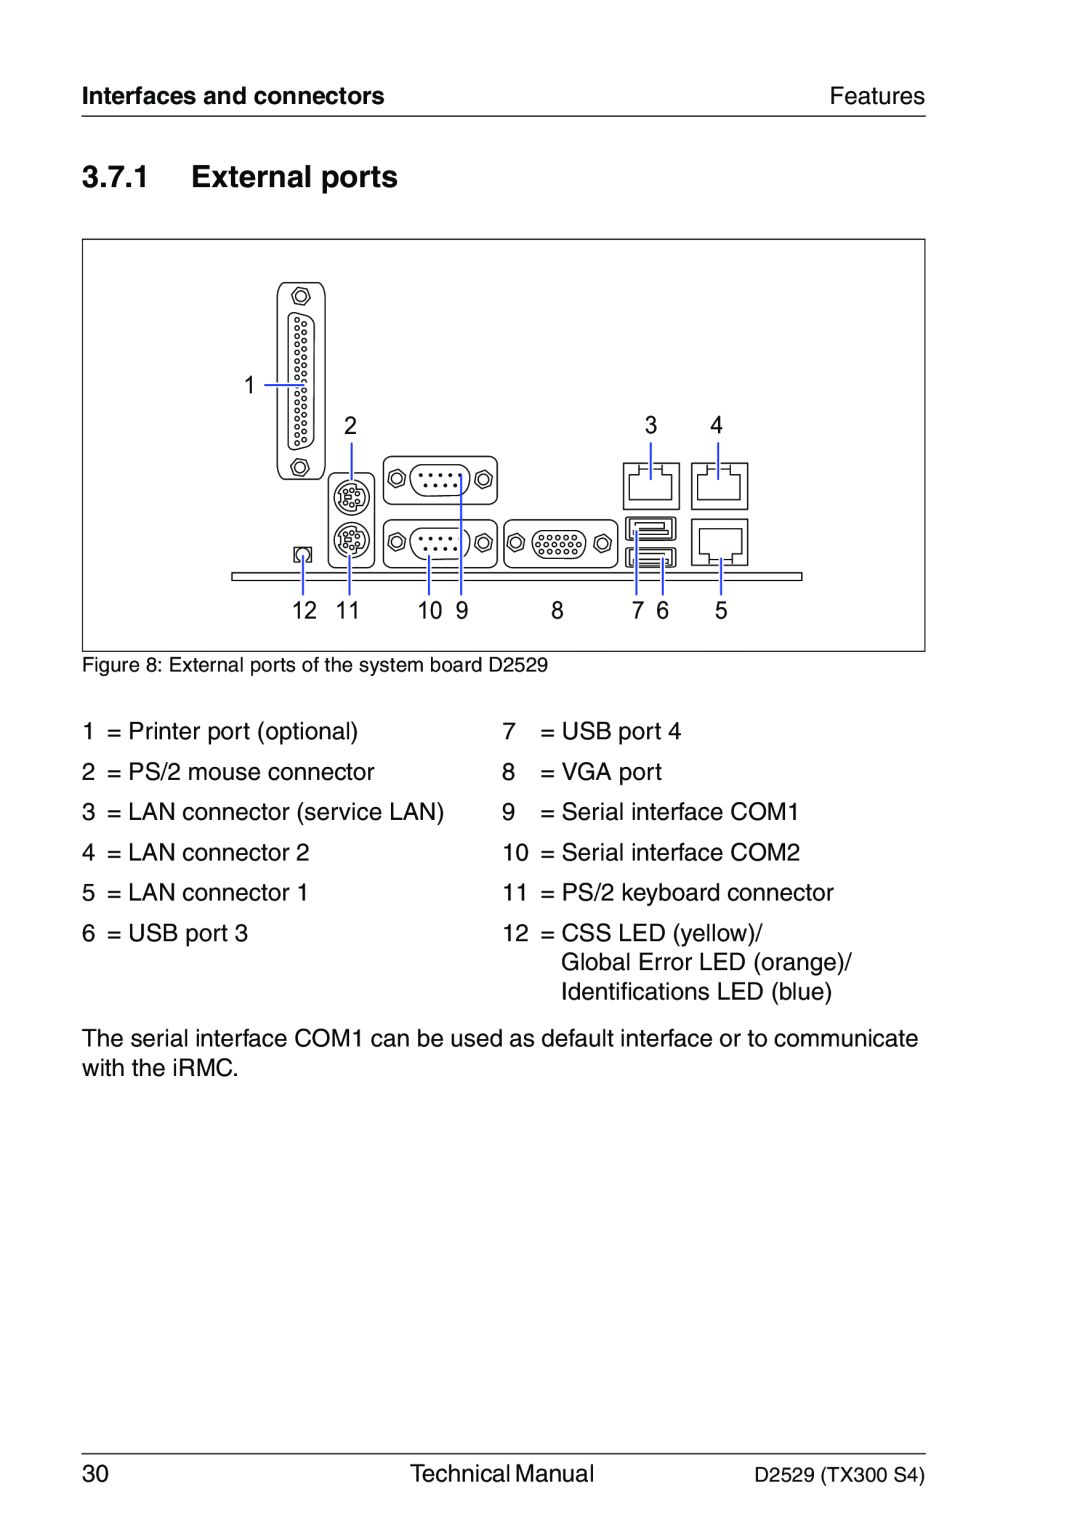 Fujitsu D2529 technical manual External ports, Interfaces and connectors 